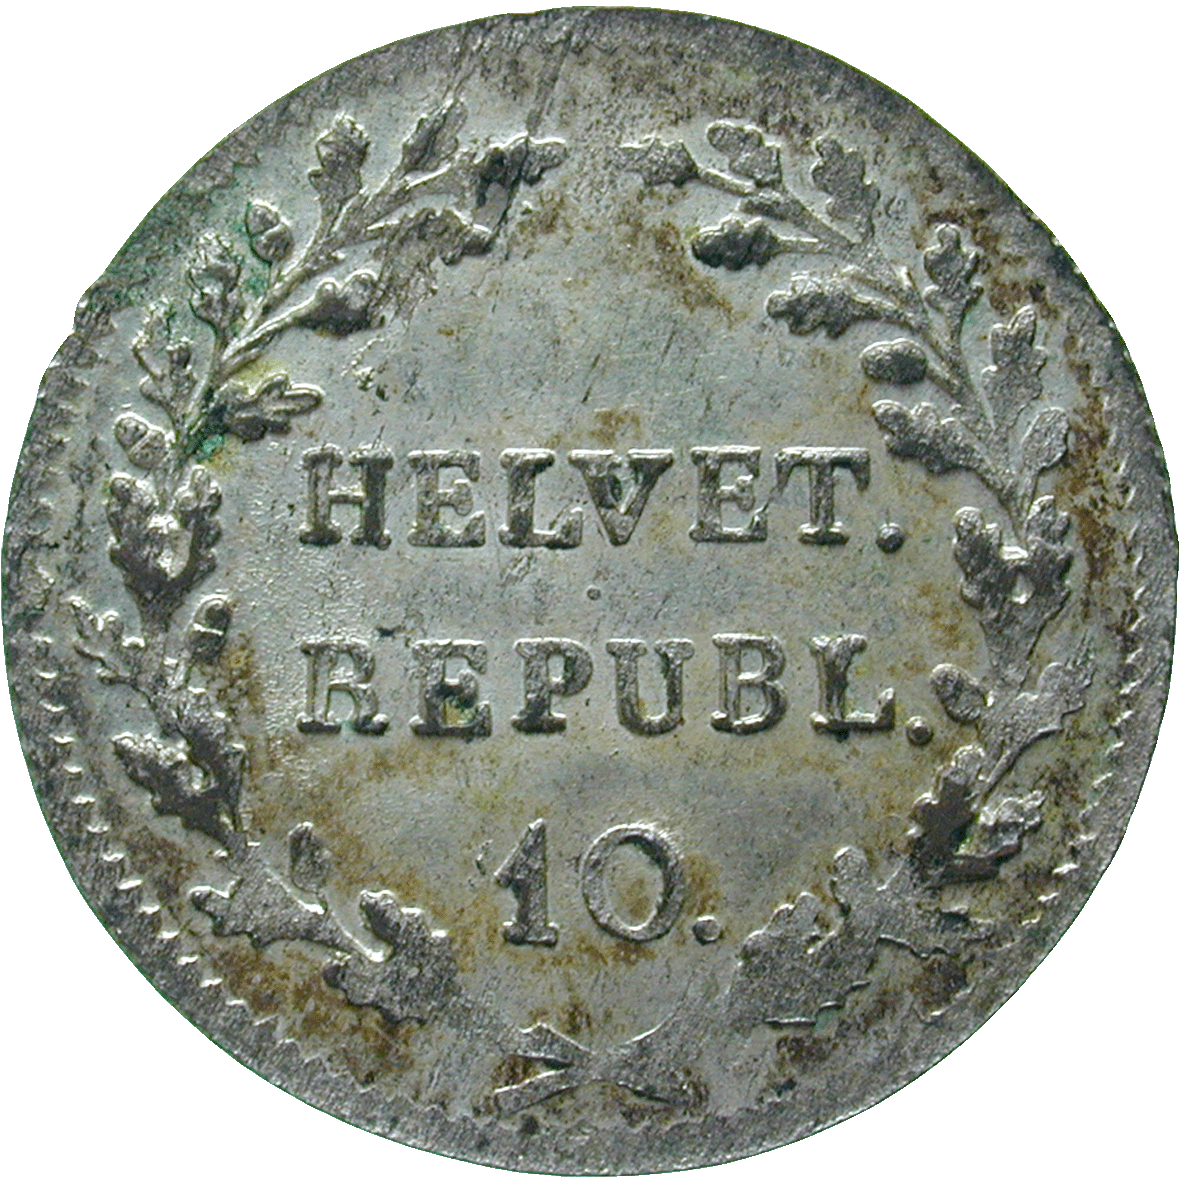 Helvetische Republik, 1 Batzen 1799 (obverse)